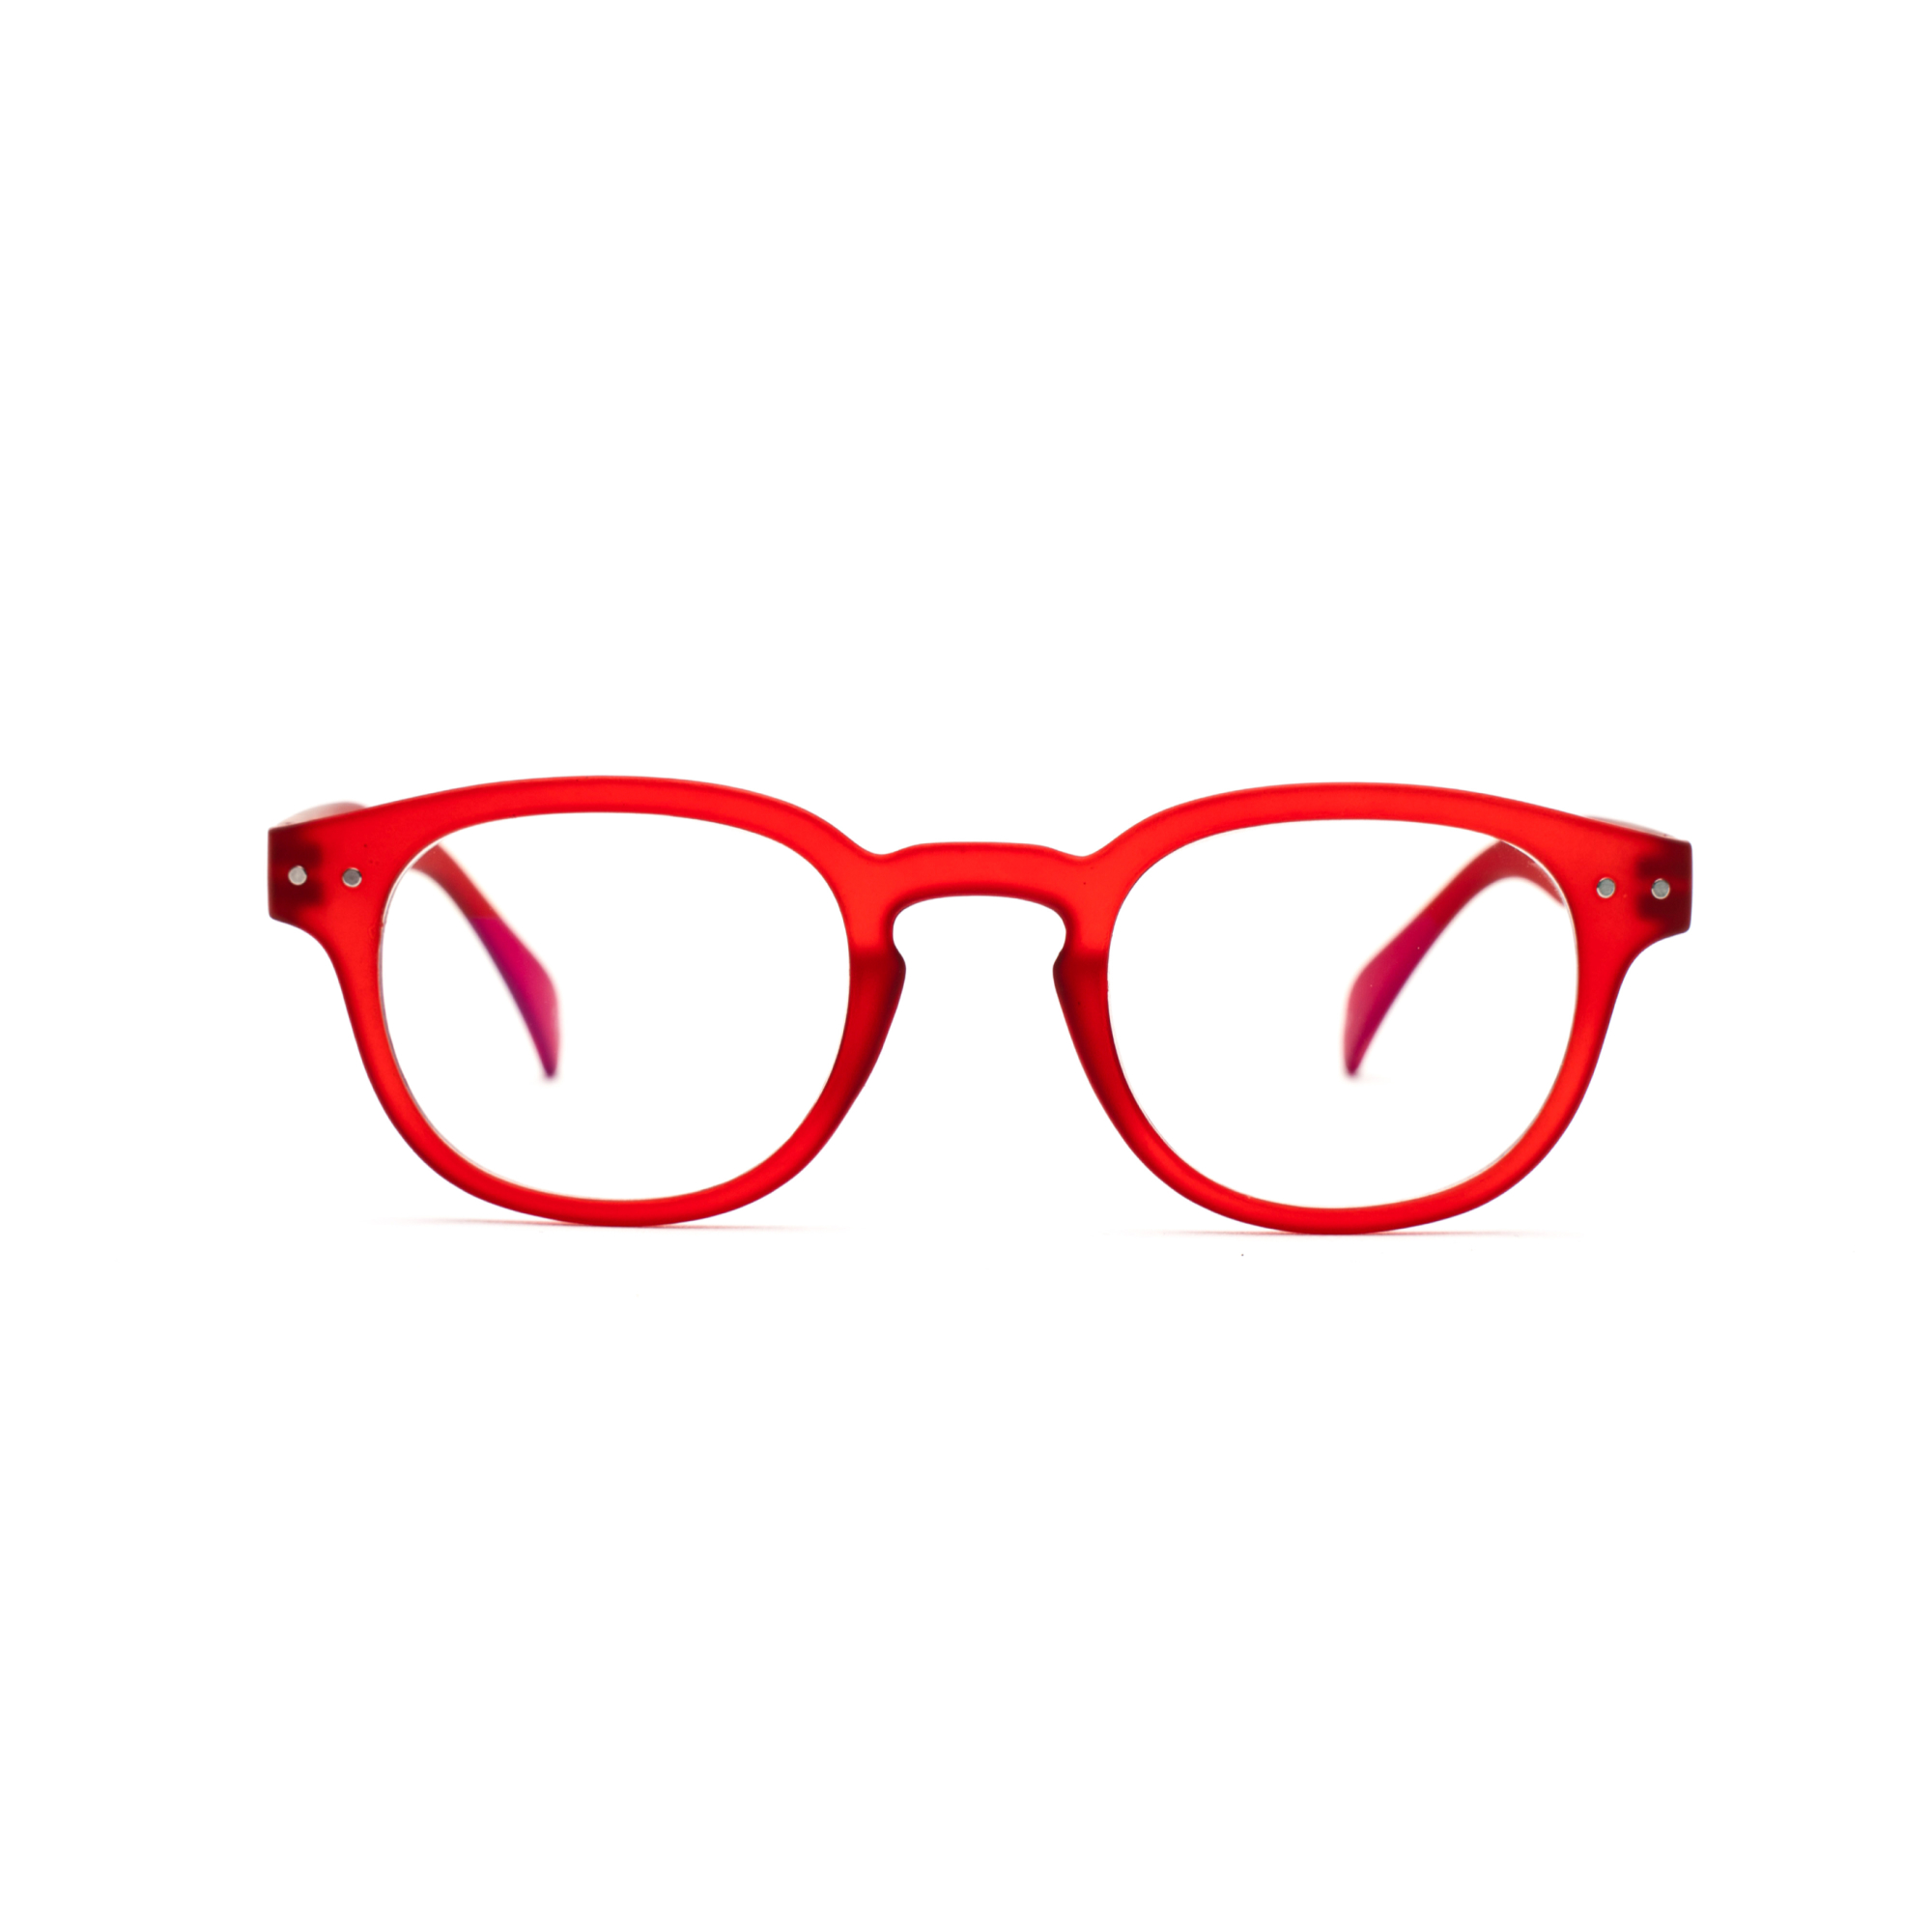 Men's reading glasses – Anton Ultimate m - Red